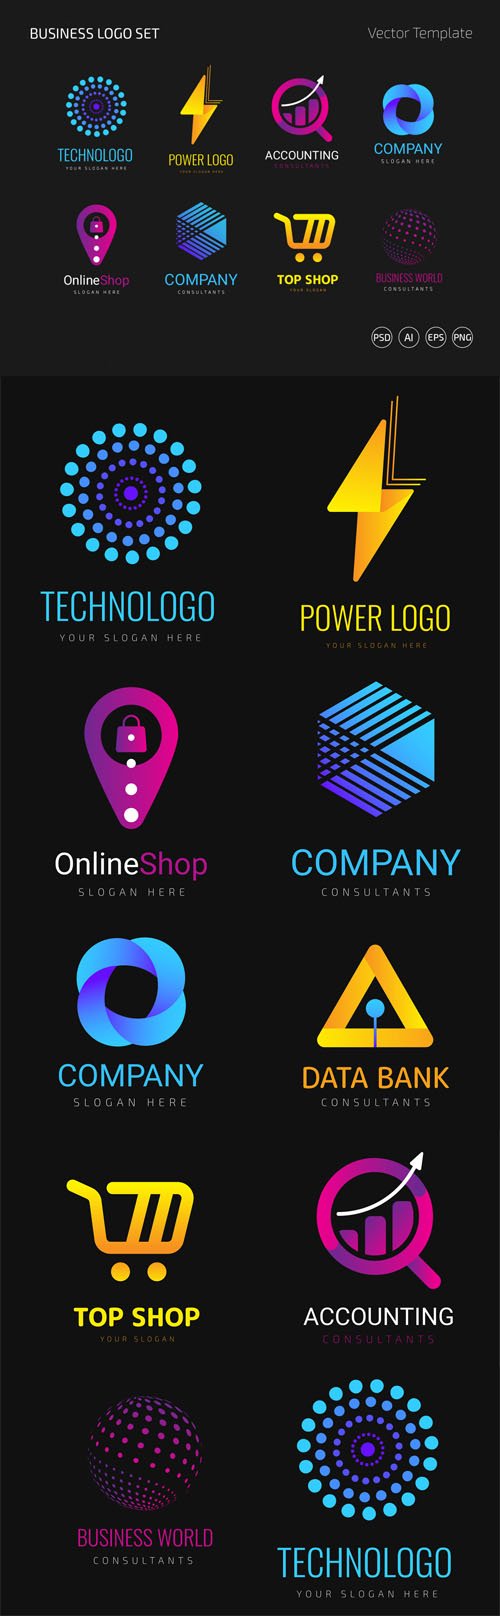 9 Business Logo Vector Templates Collection